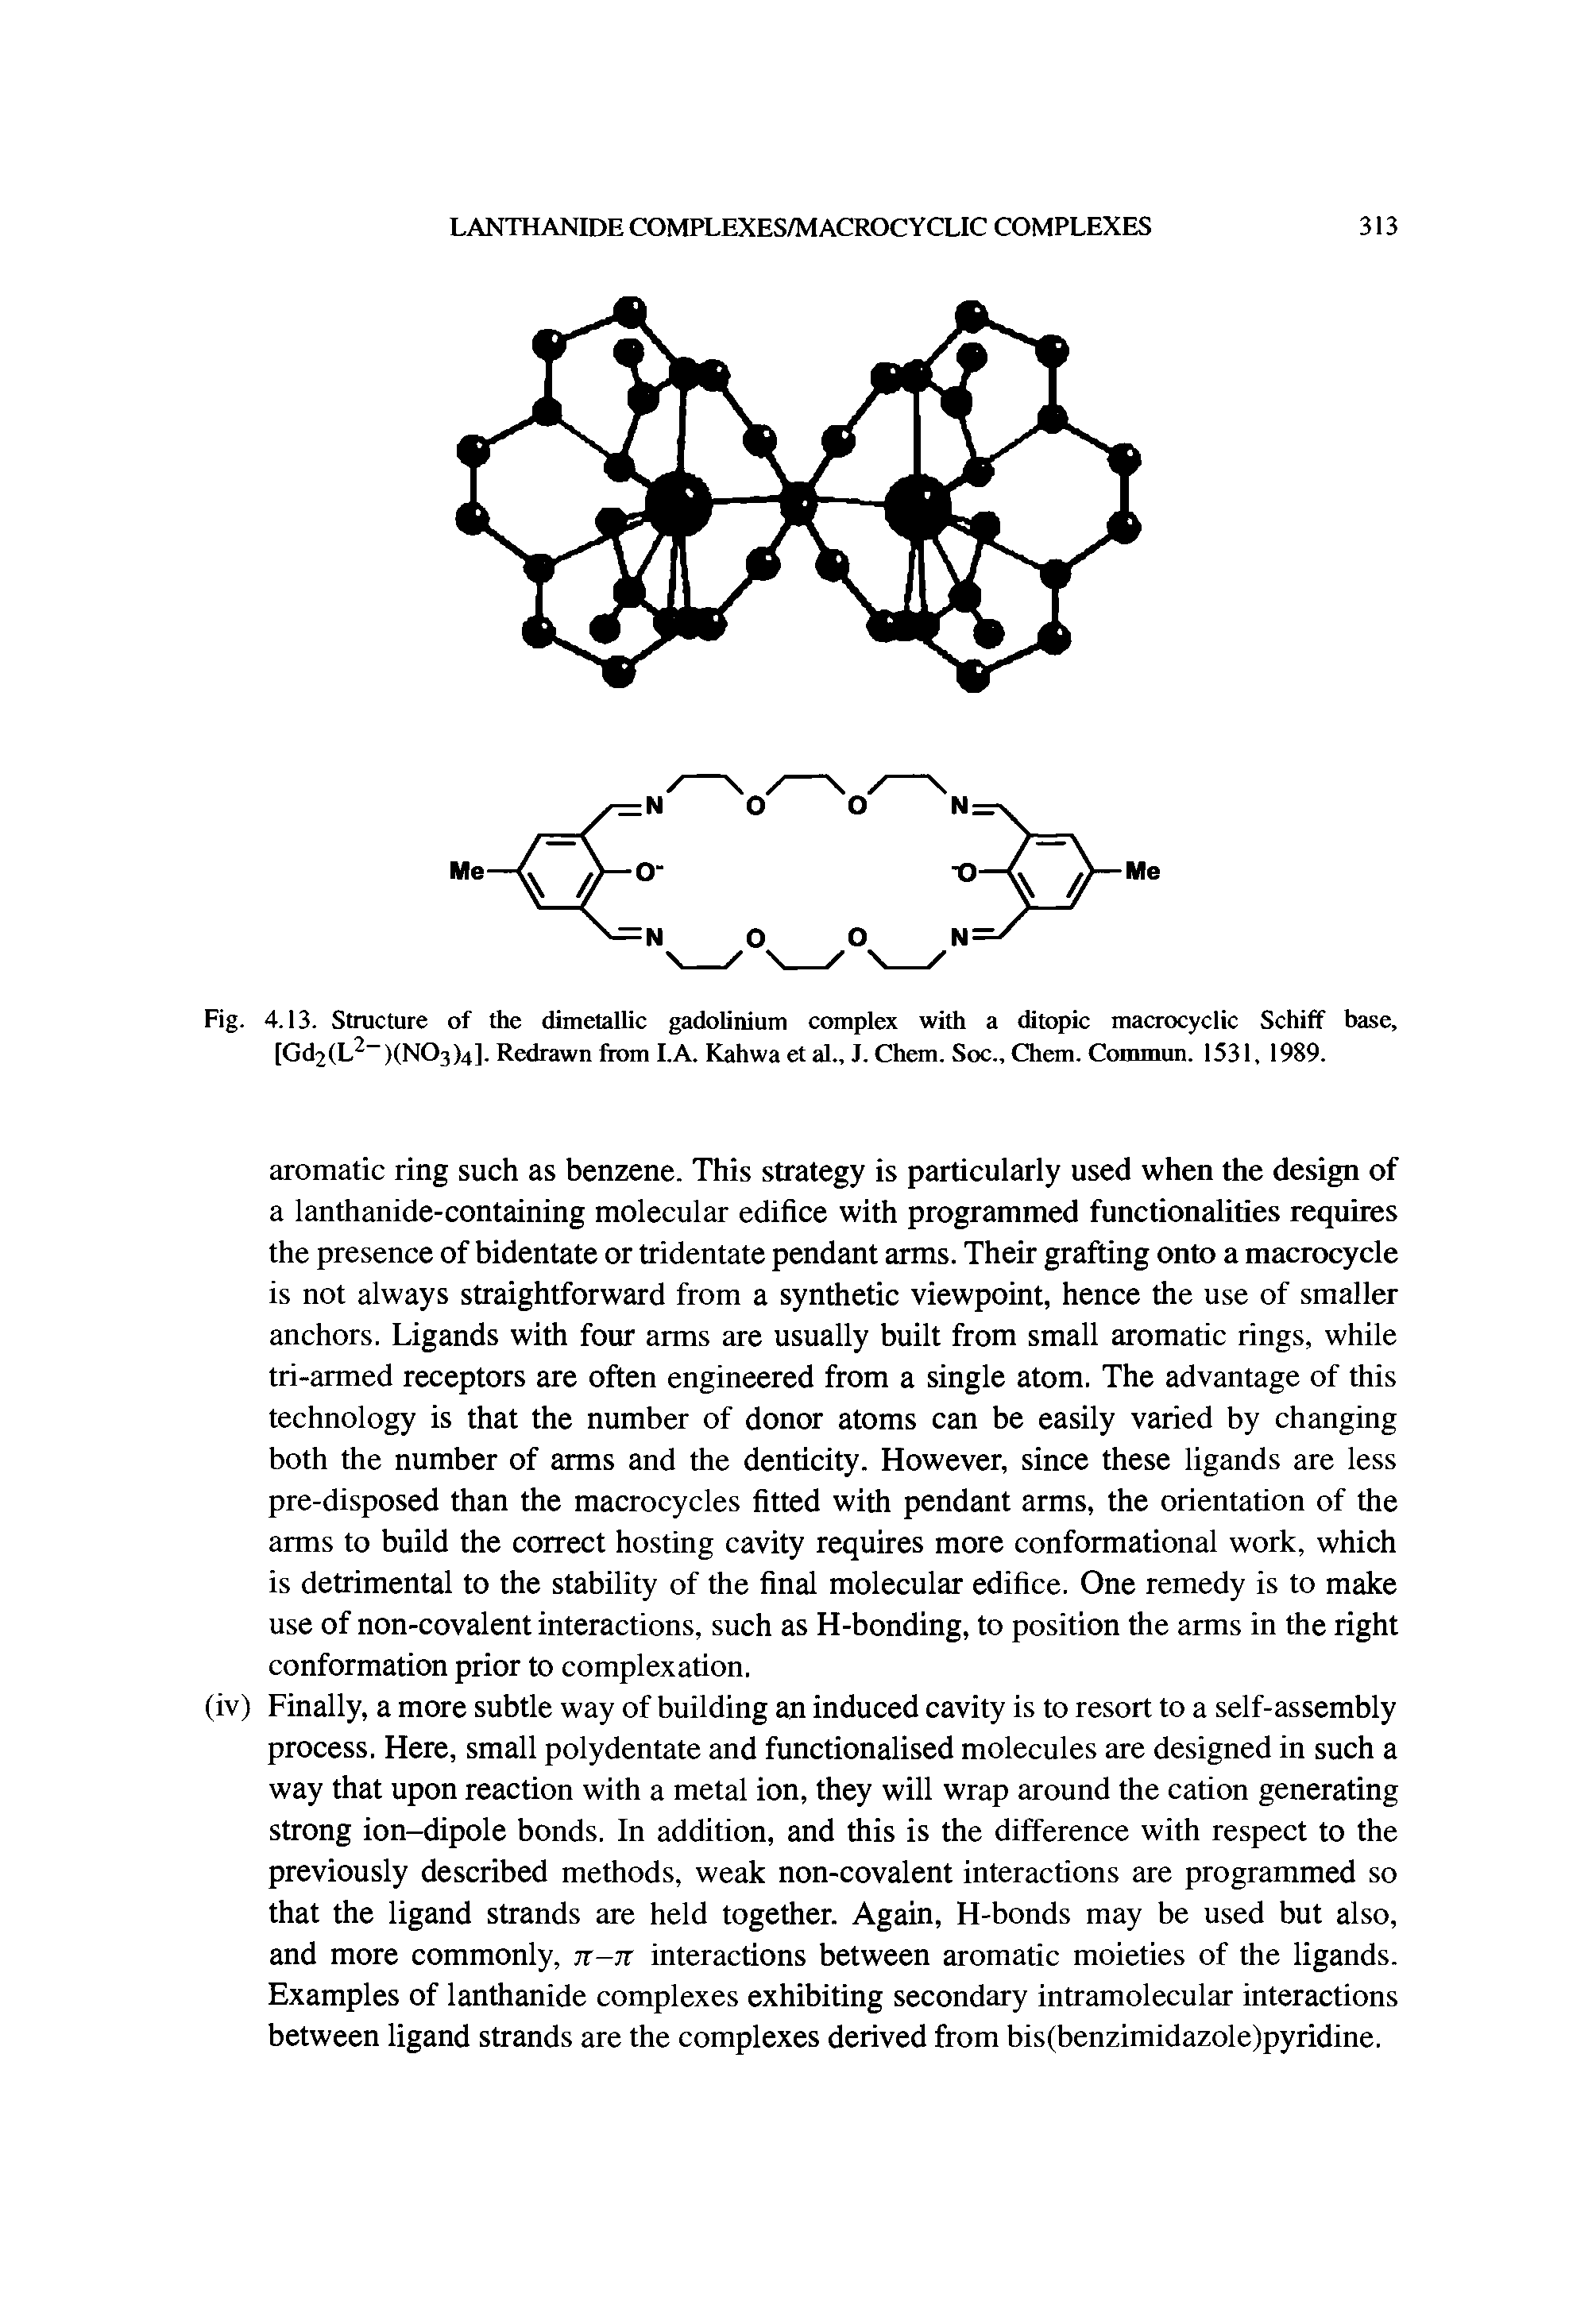 Fig. 4.13. Structure of the dimetallic gadolinium complex with a ditopic macrocyclic Schiff base, [Gd2(L2 )(N03)4], Redrawn from I.A. Kahwa et al., J. Chem. Soc., Chem. Coramun. 1531, 1989.